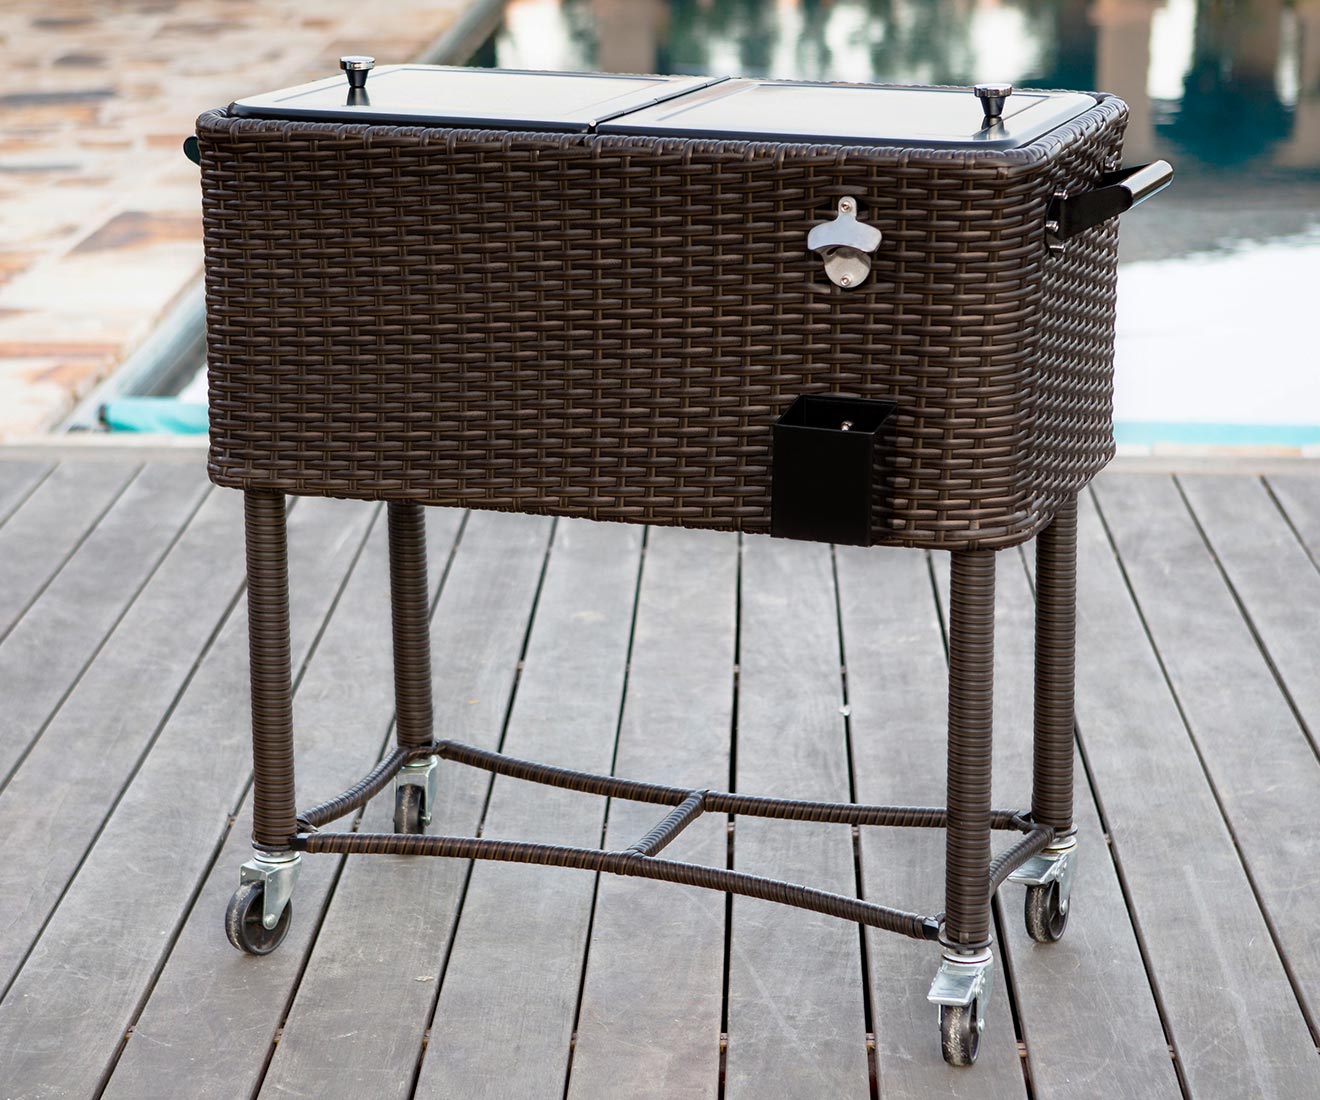 Permasteel 80-Quart Wicker Patio Cooler in Outdoor Living Setting Patio Backyard Deck Porch